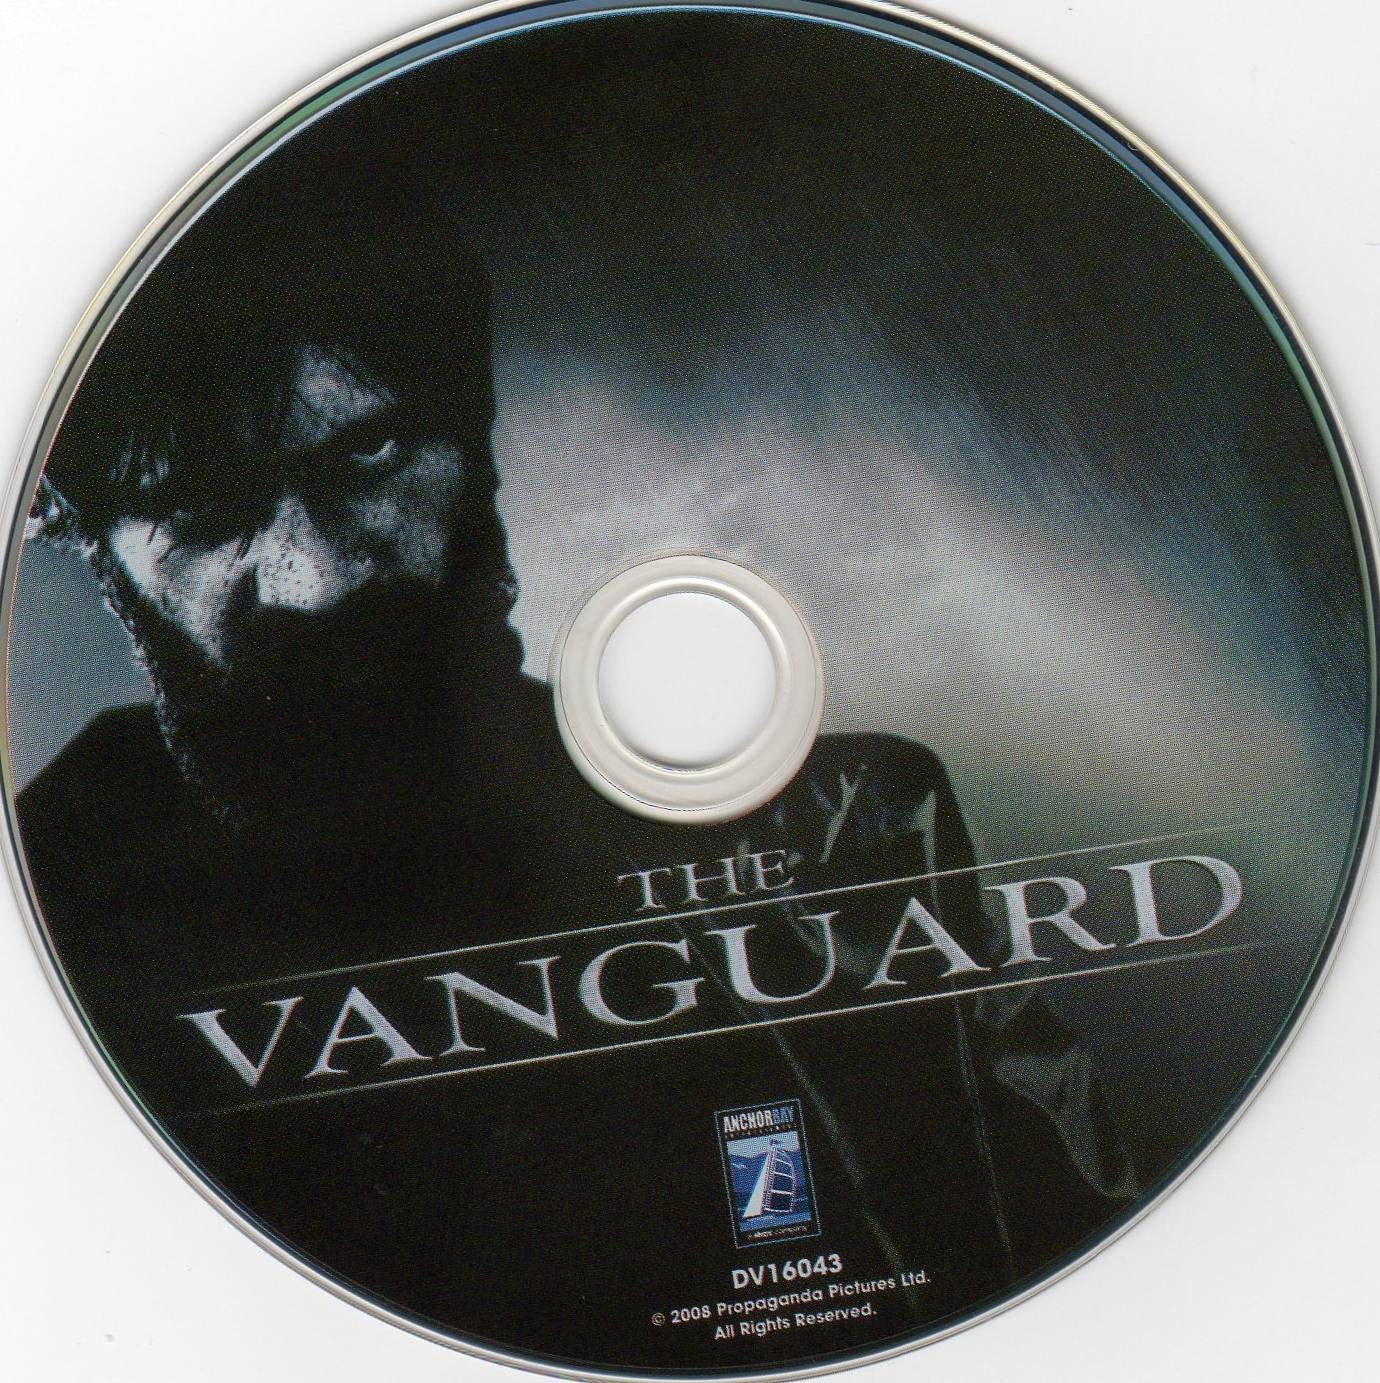 The vanguard